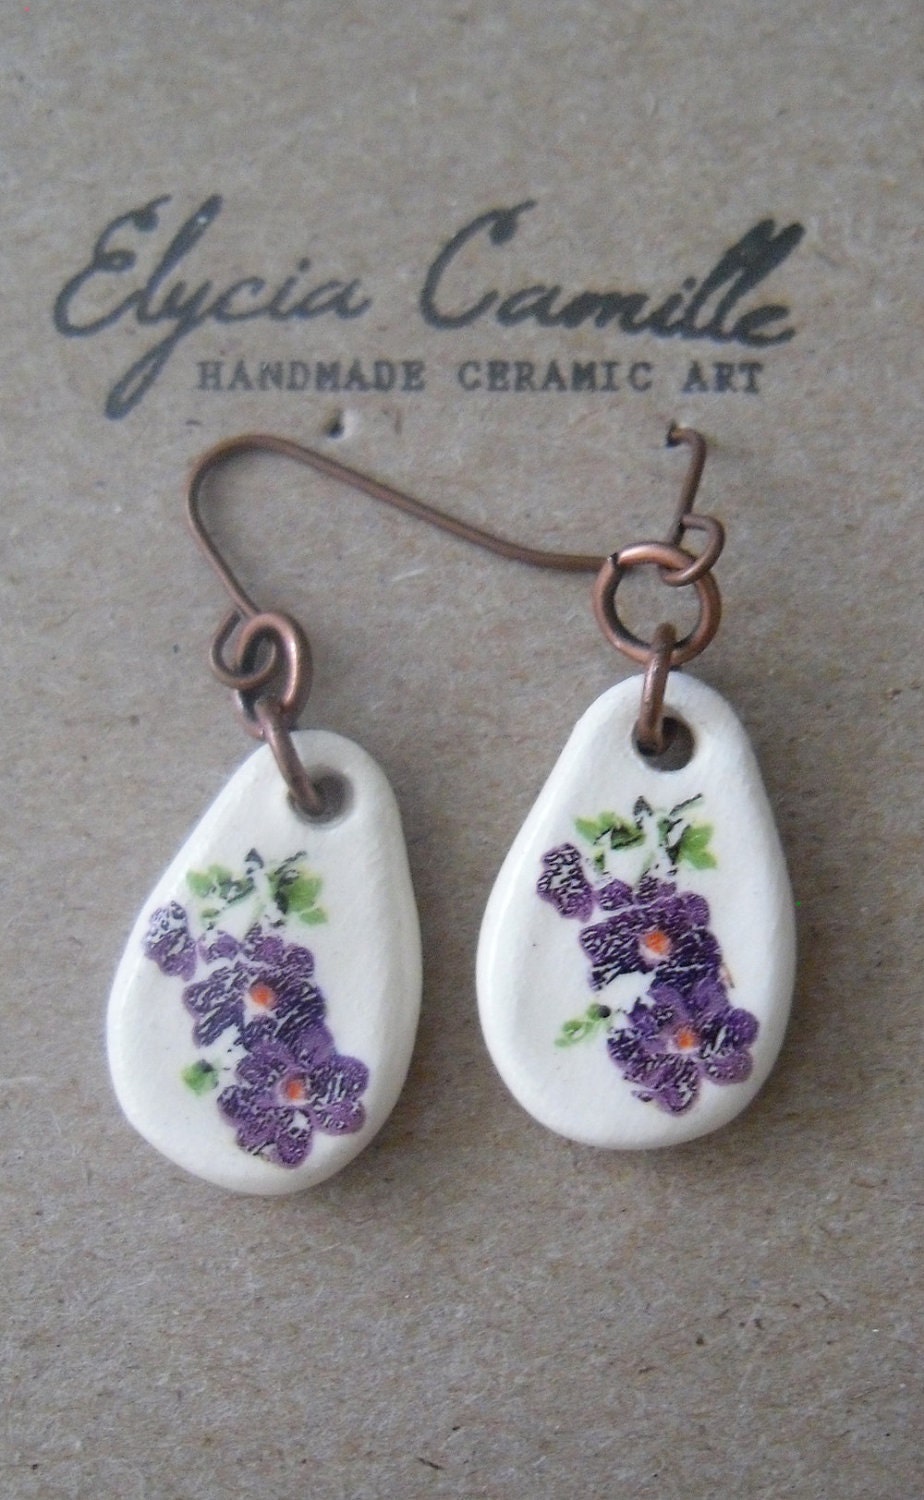 handmade ceramic earrings, dangle, purple flowers, antique copper colored fish hooks